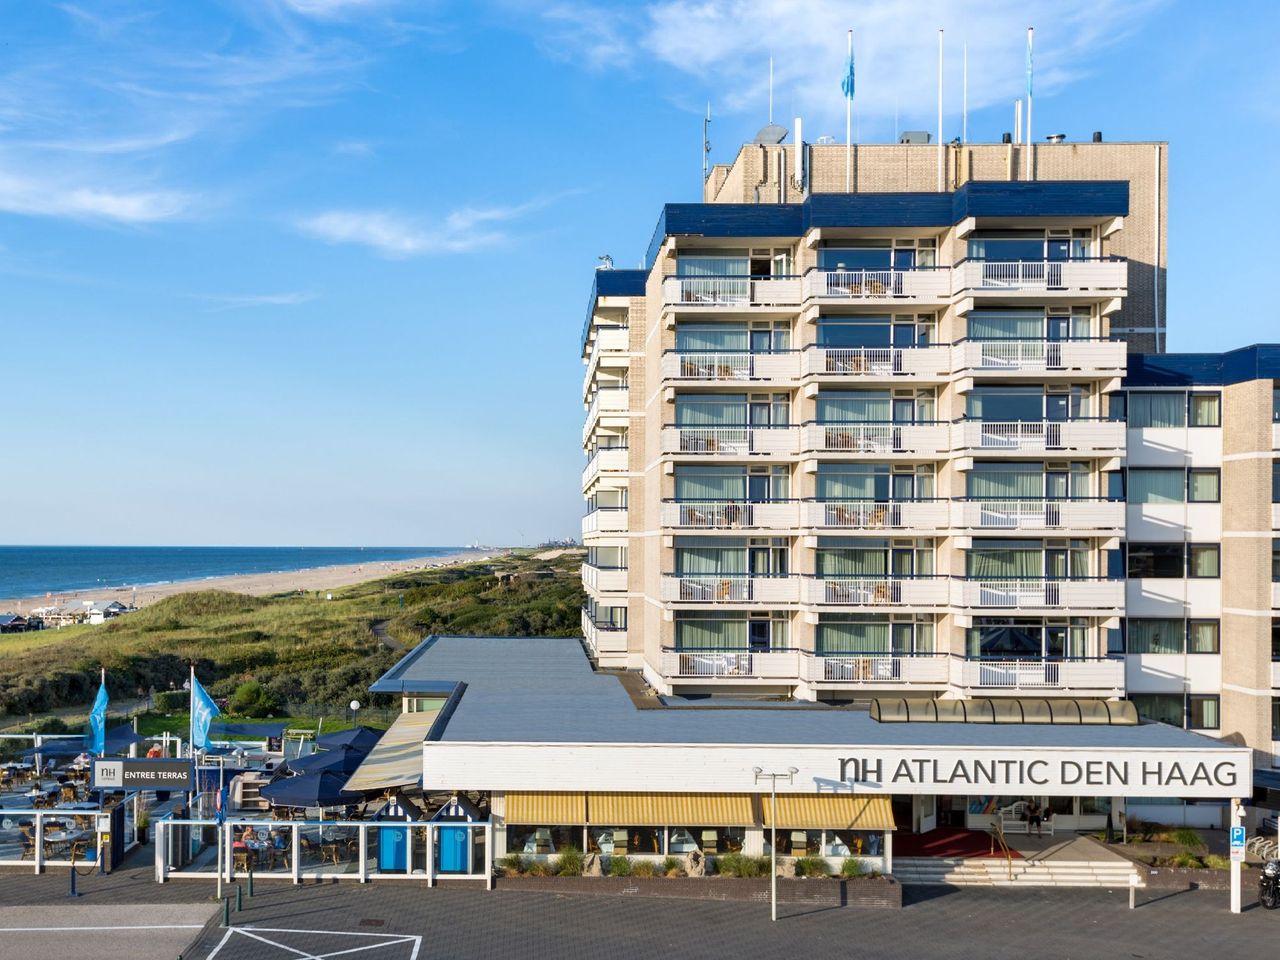 2 Tage im Hotel NH Atlantic Den Haag 